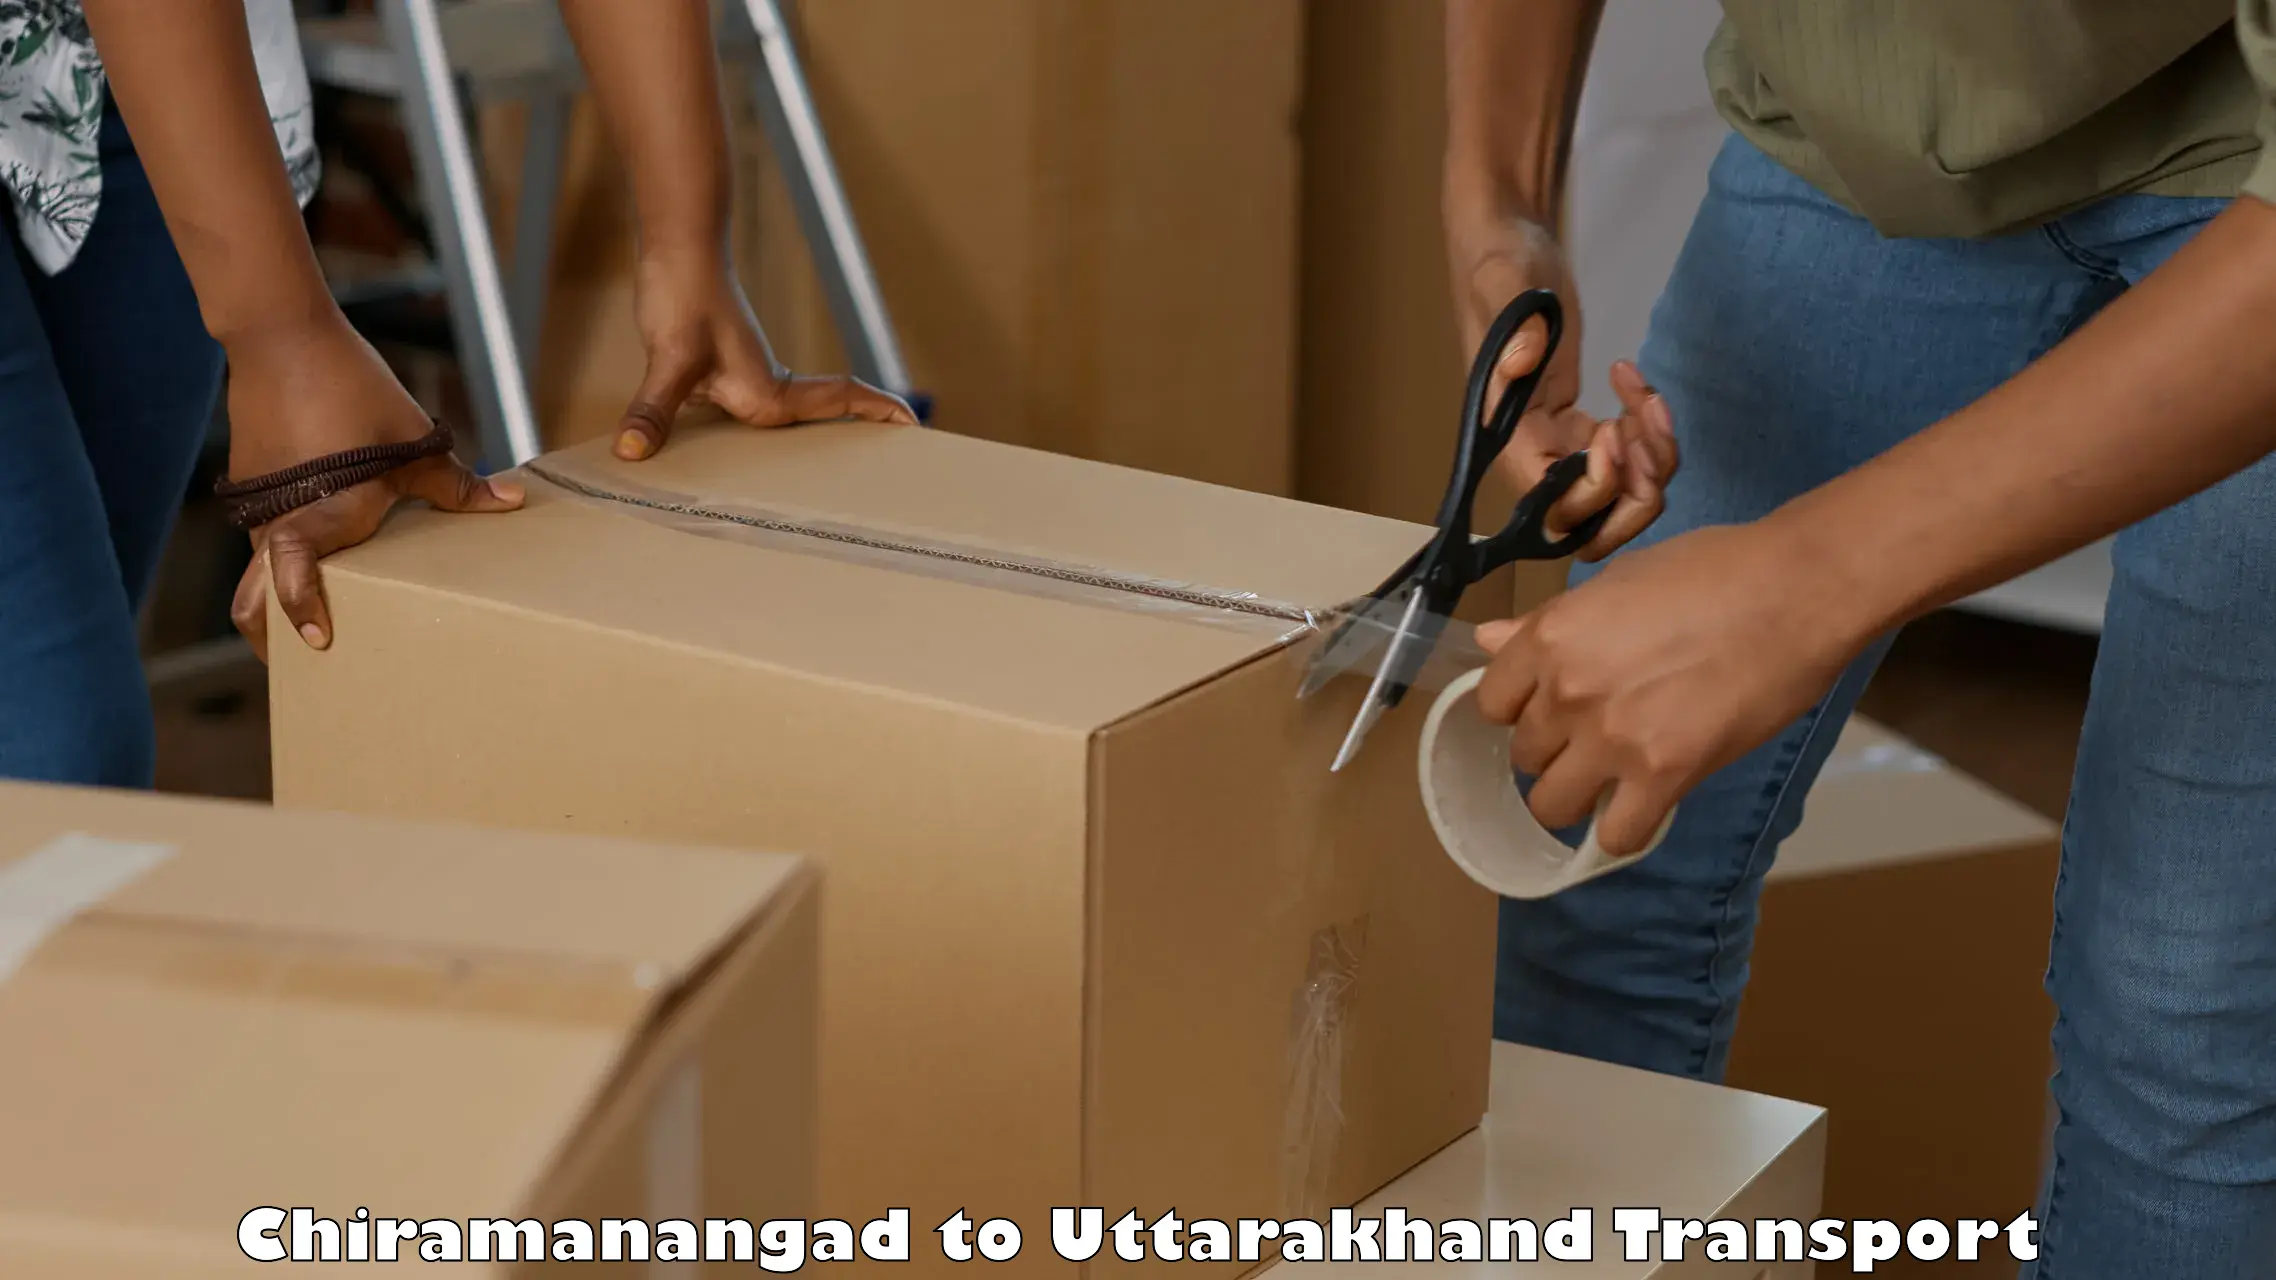 Truck transport companies in India Chiramanangad to Rudrapur